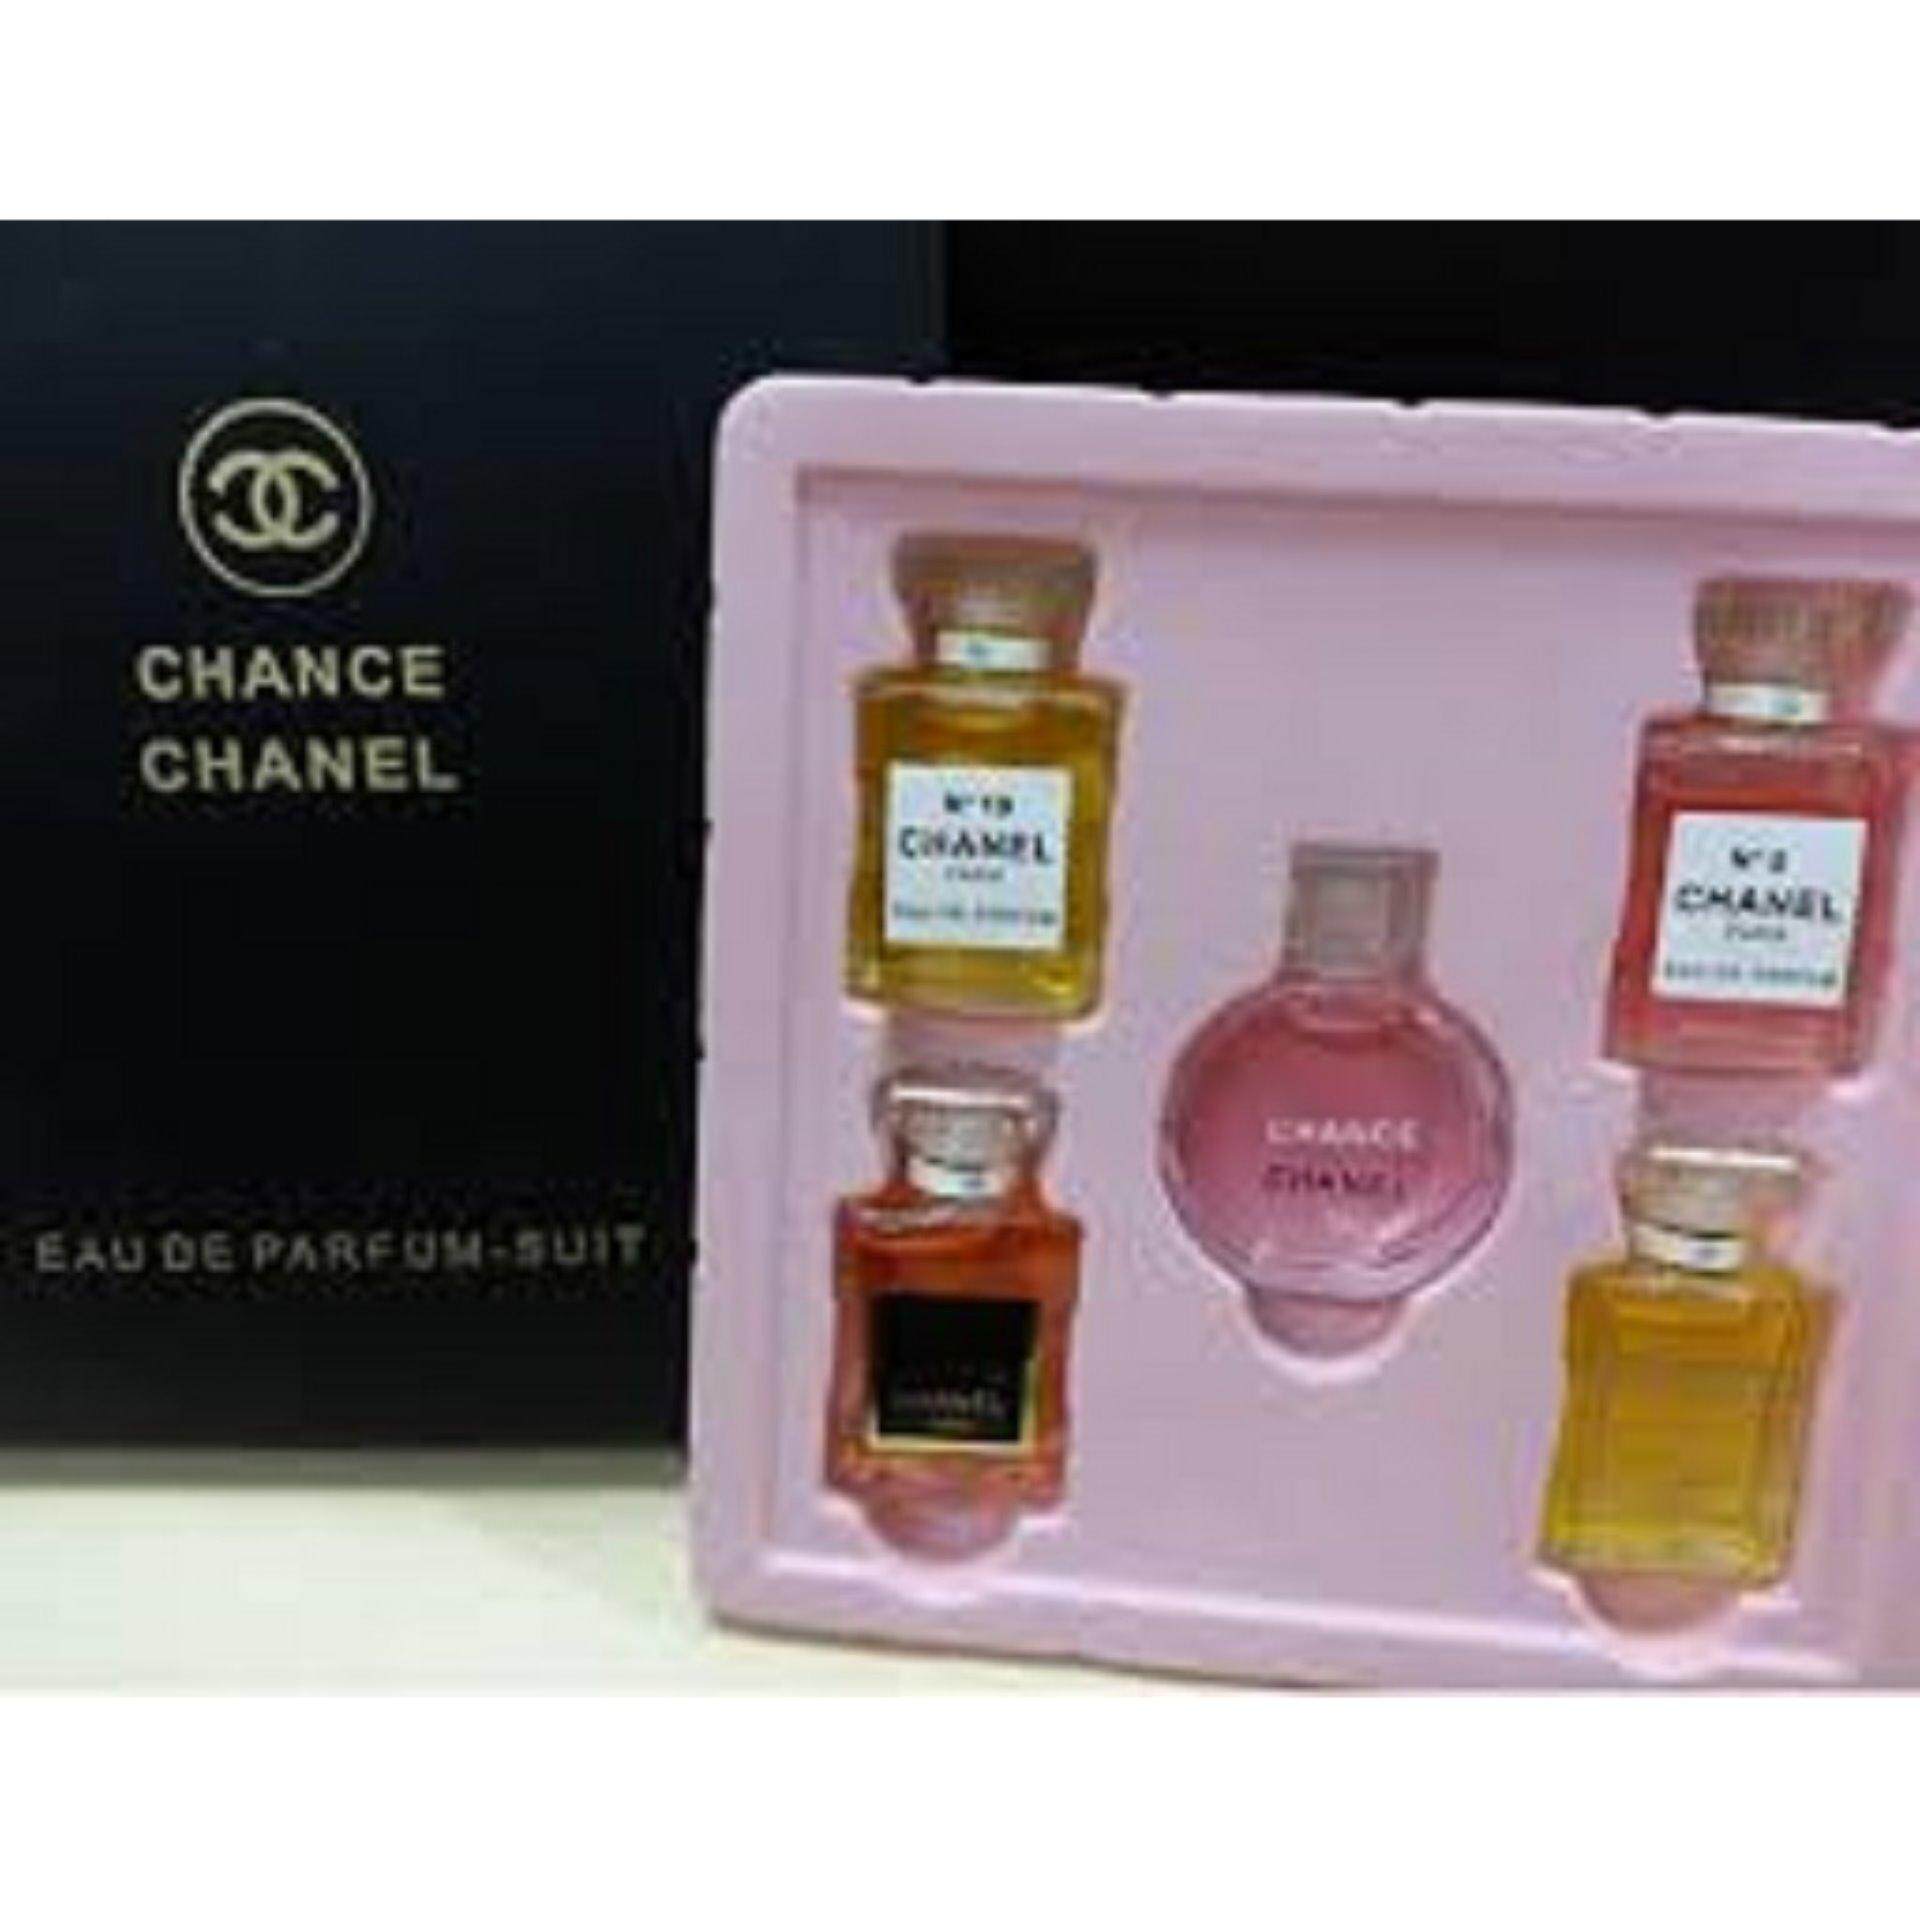 1X Chanel Travel Miniature Perfume 5ML